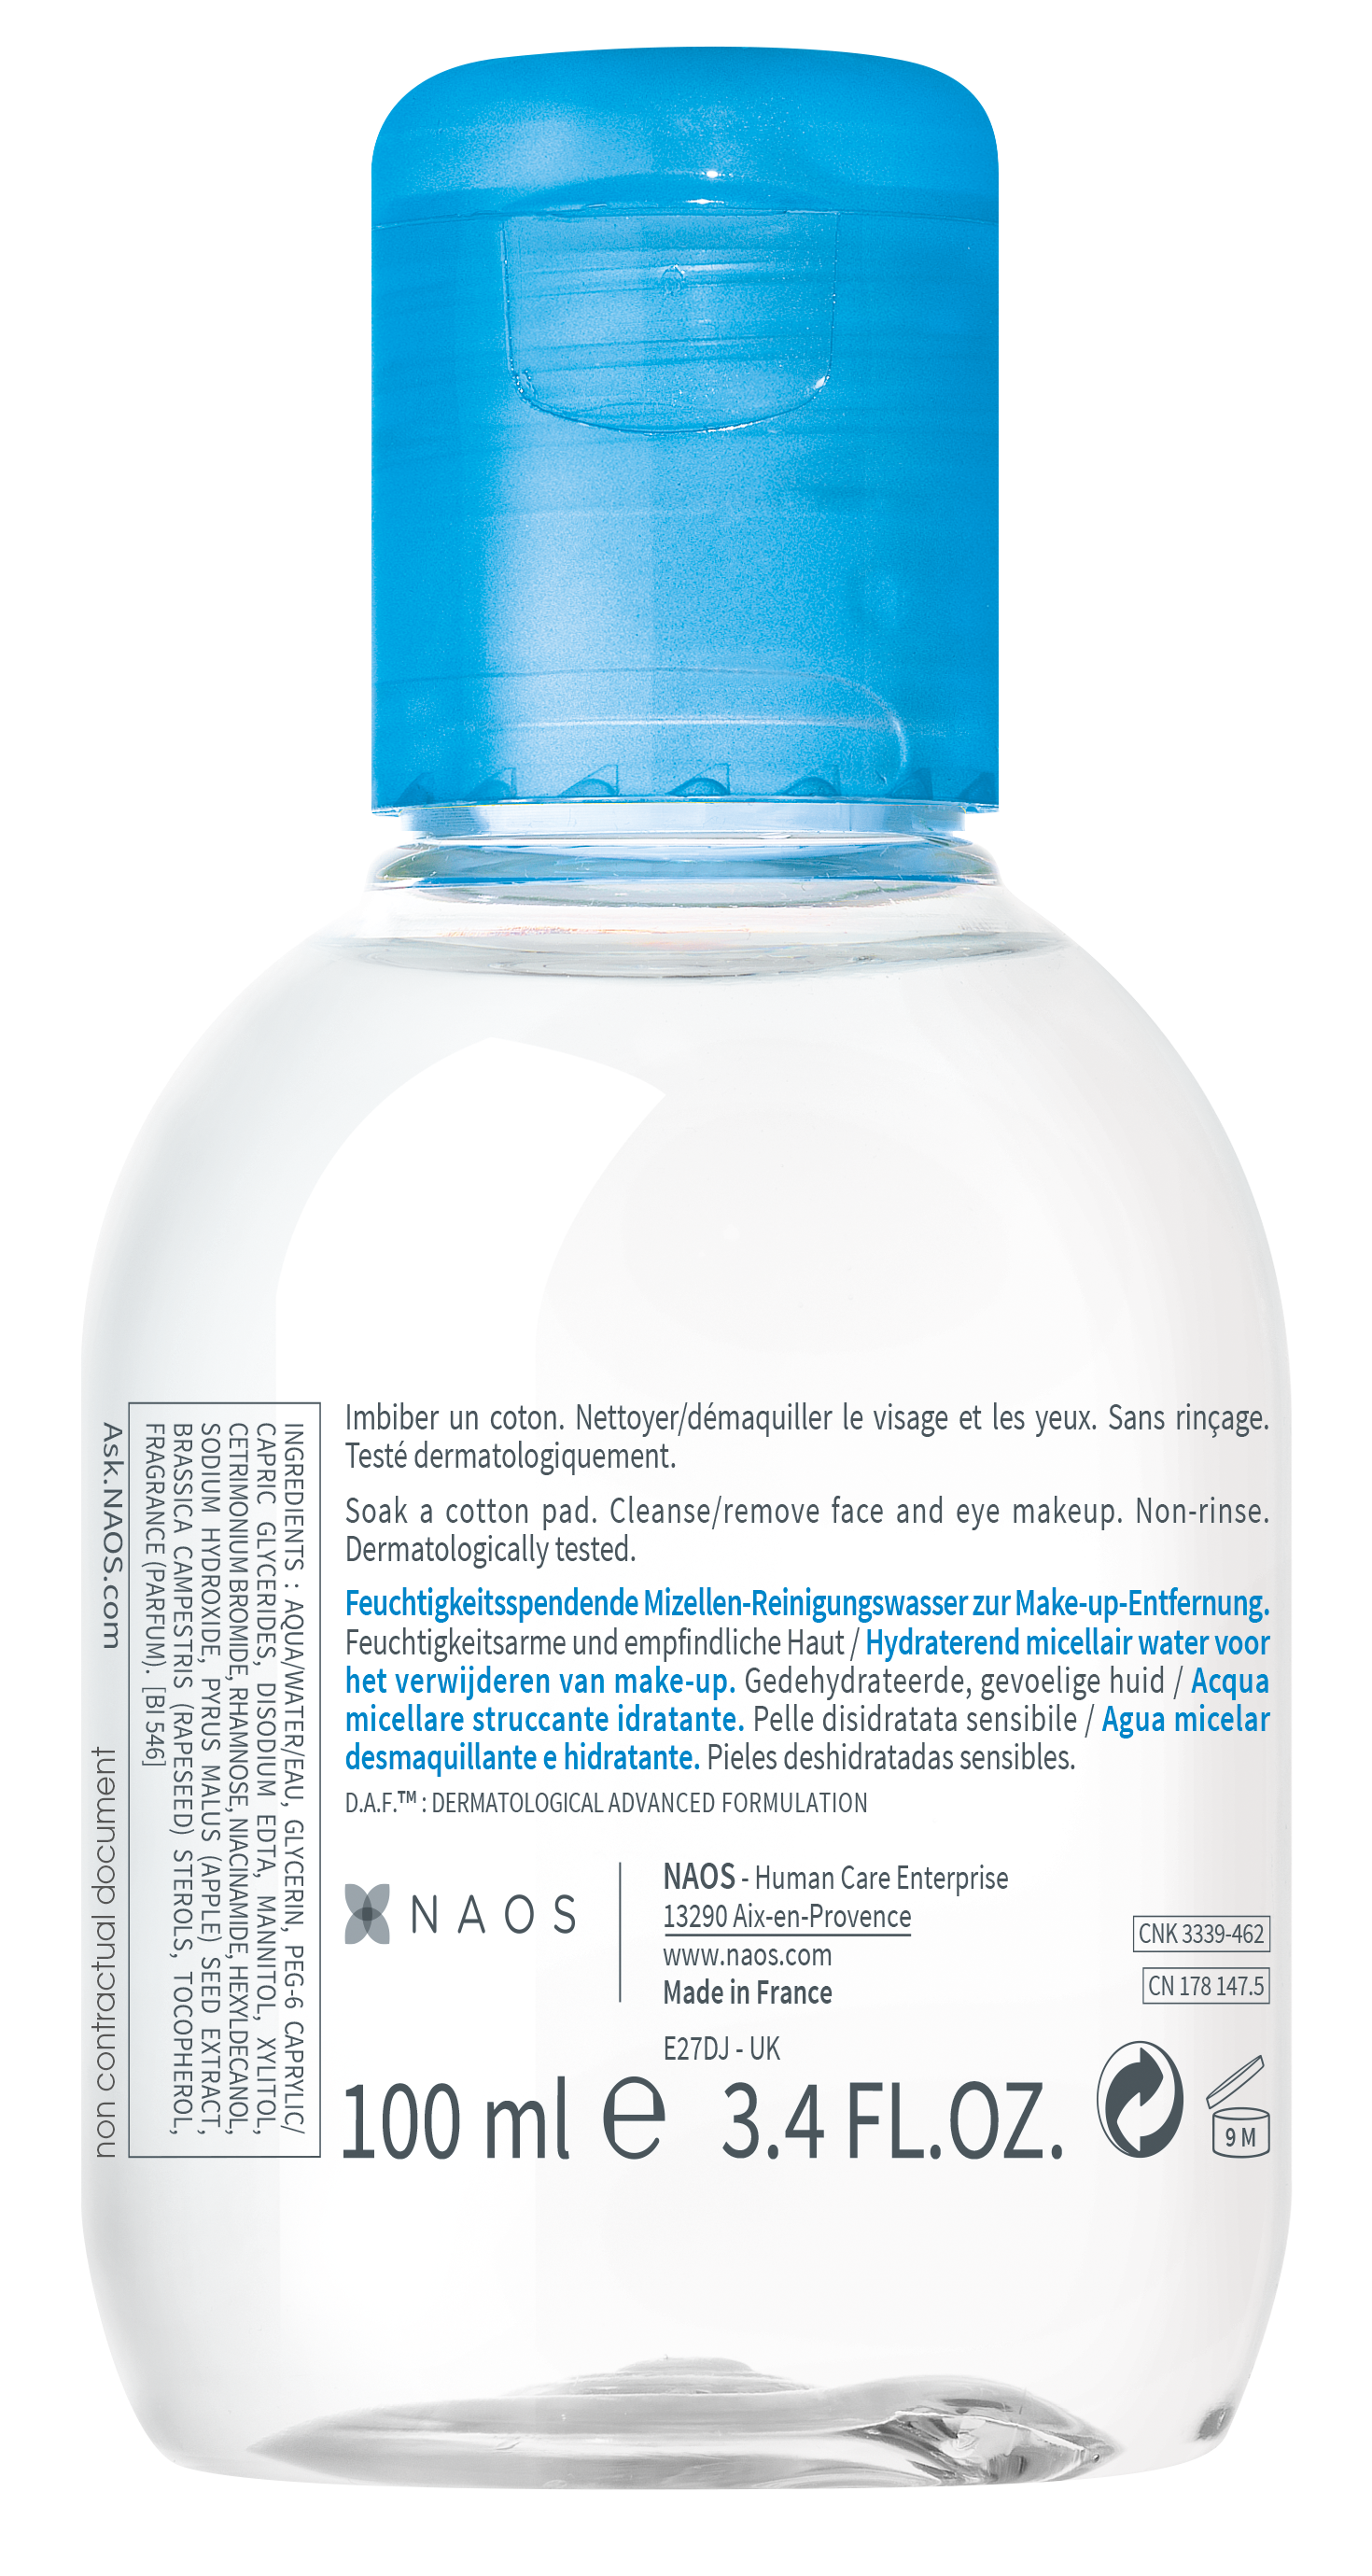 Bioderma Hydrabio H2O Hydrating Micellar Water Cleanser for Dehydrated Skin 100ml